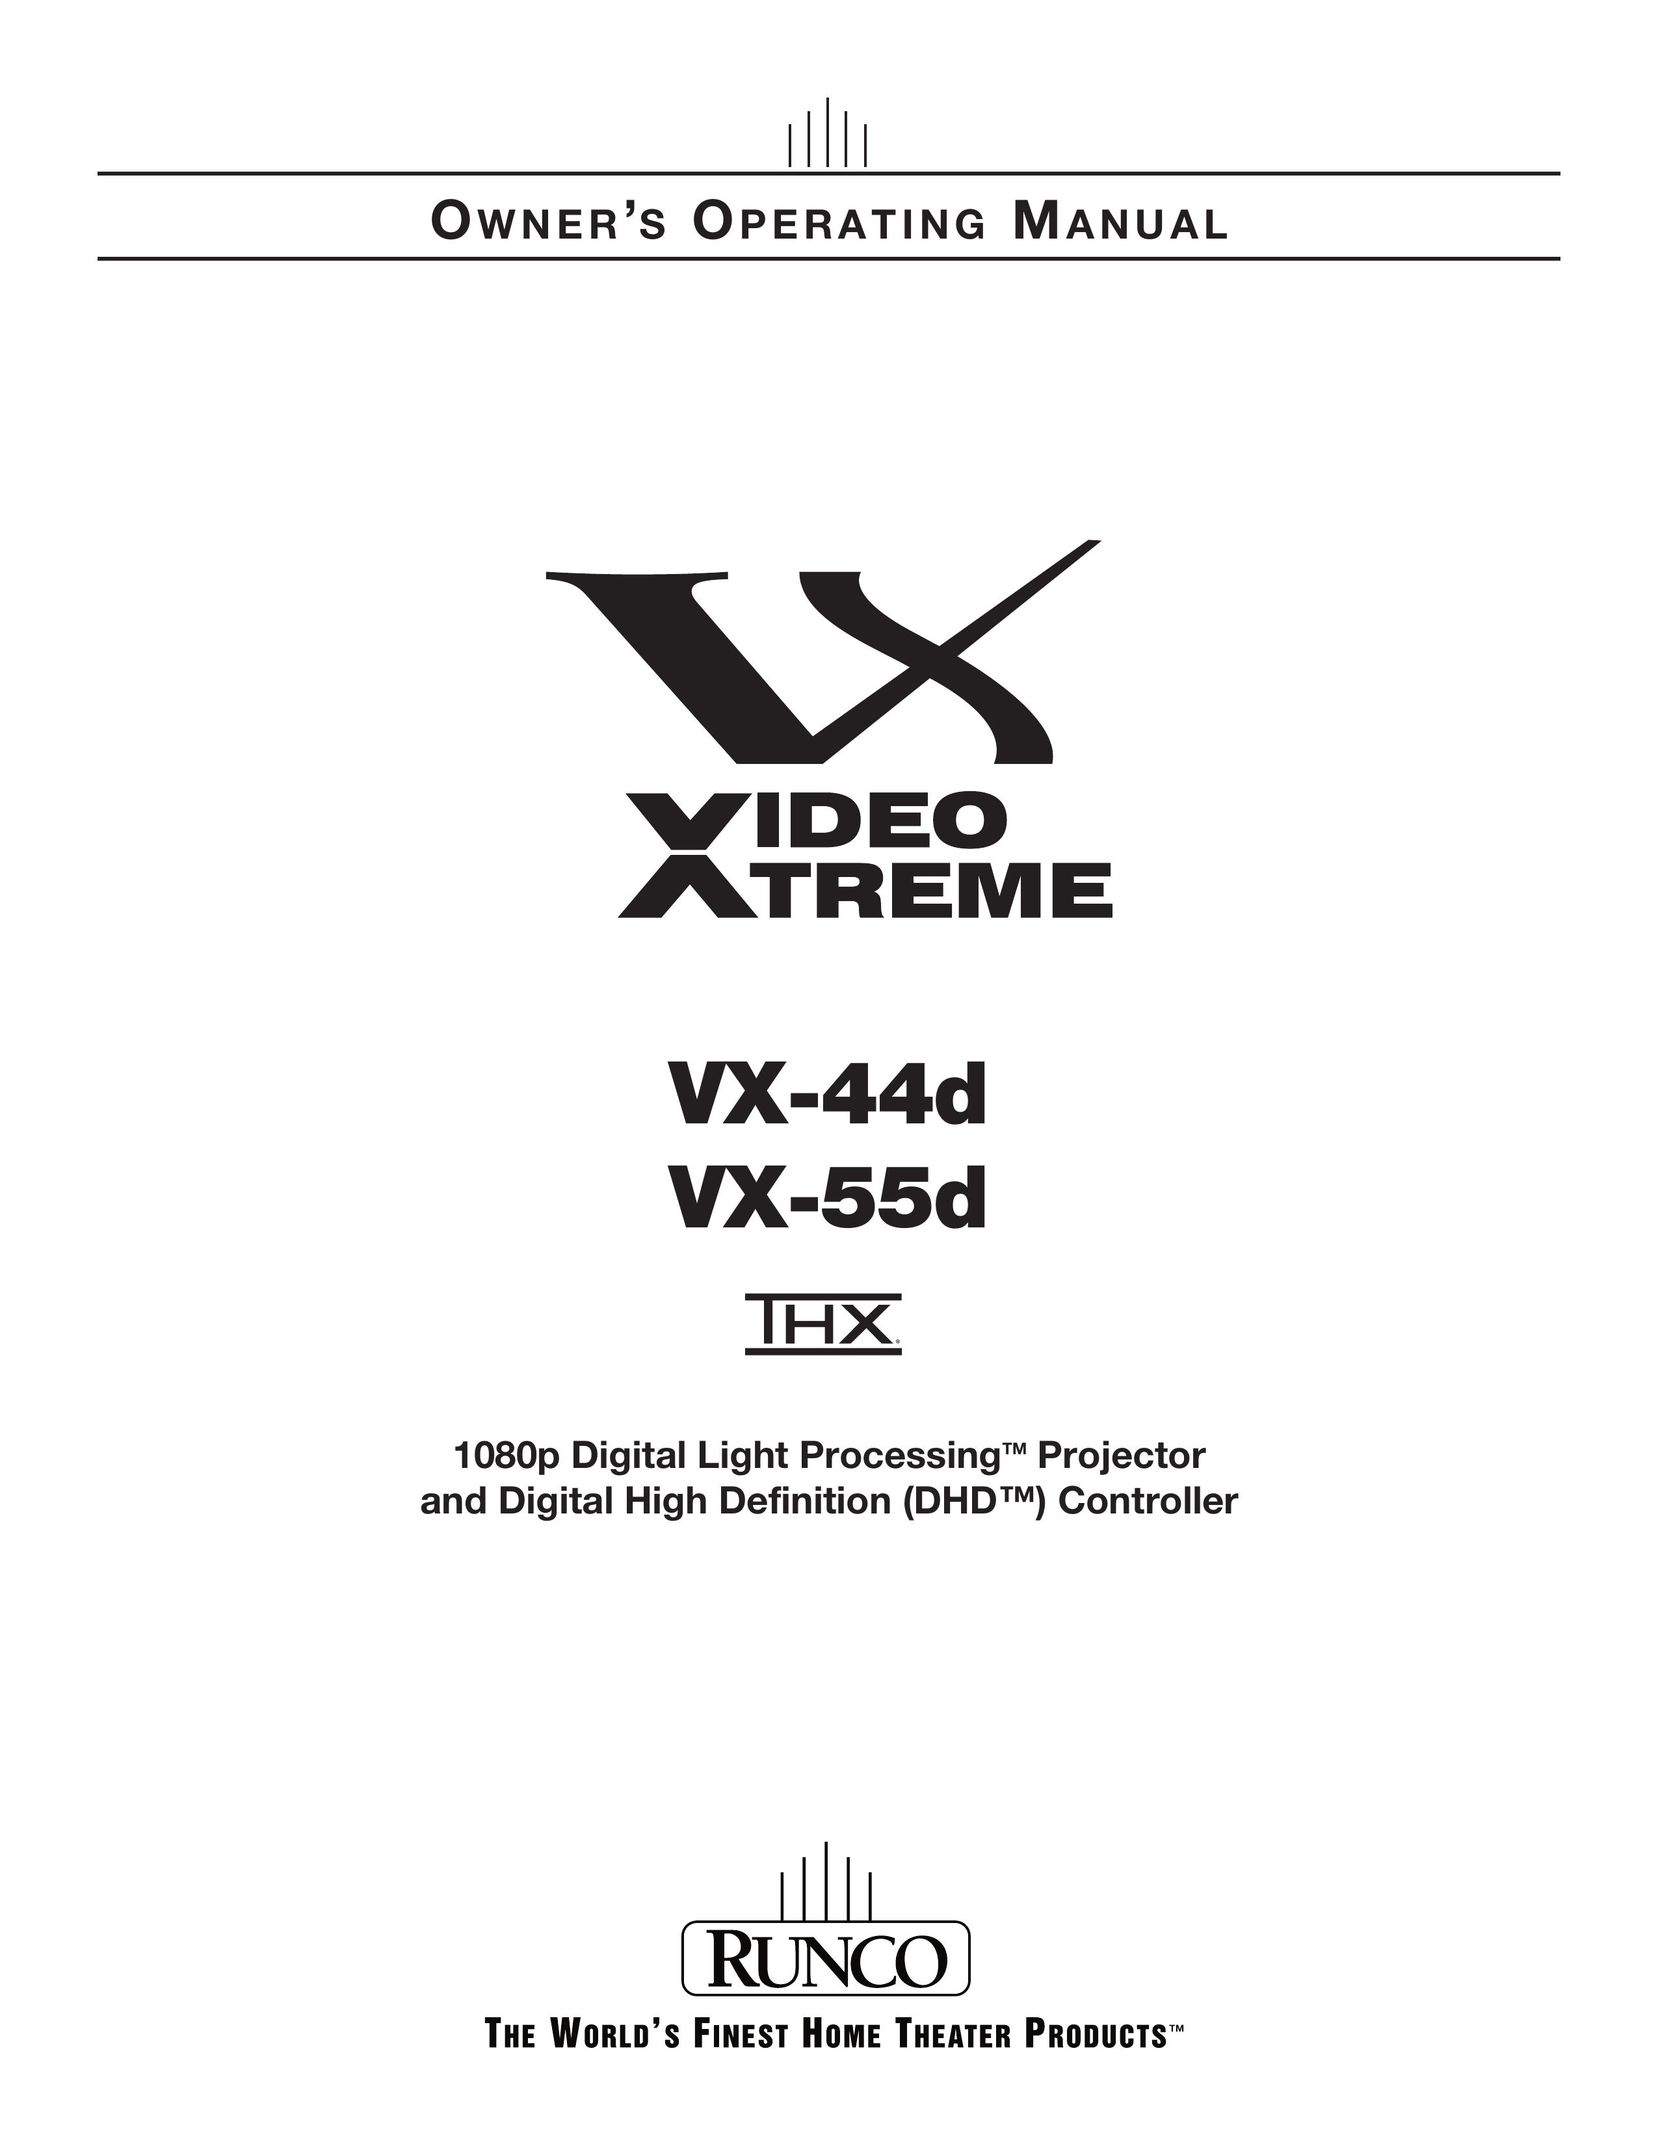 Runco VX-44d Projection Television User Manual